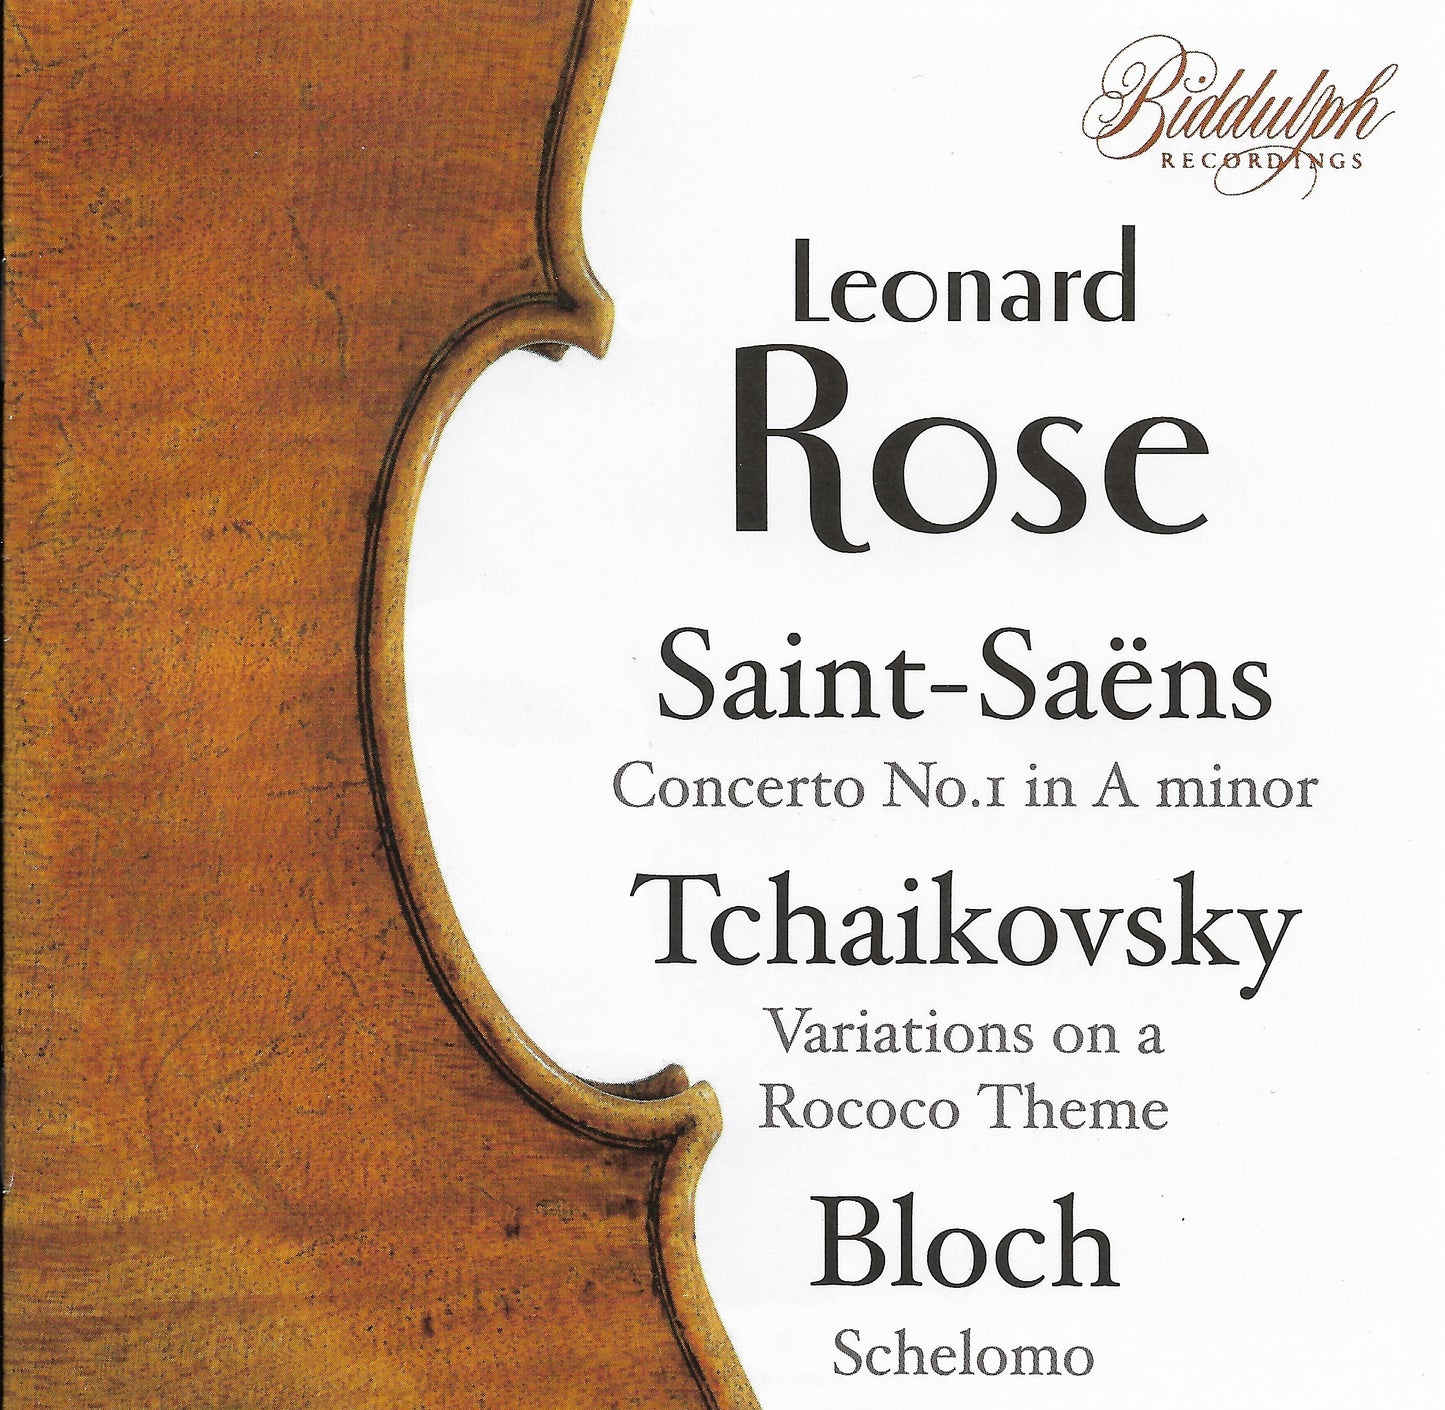 LEONARD ROSE - Saint-Saens, Tchaikovsky, Bloch